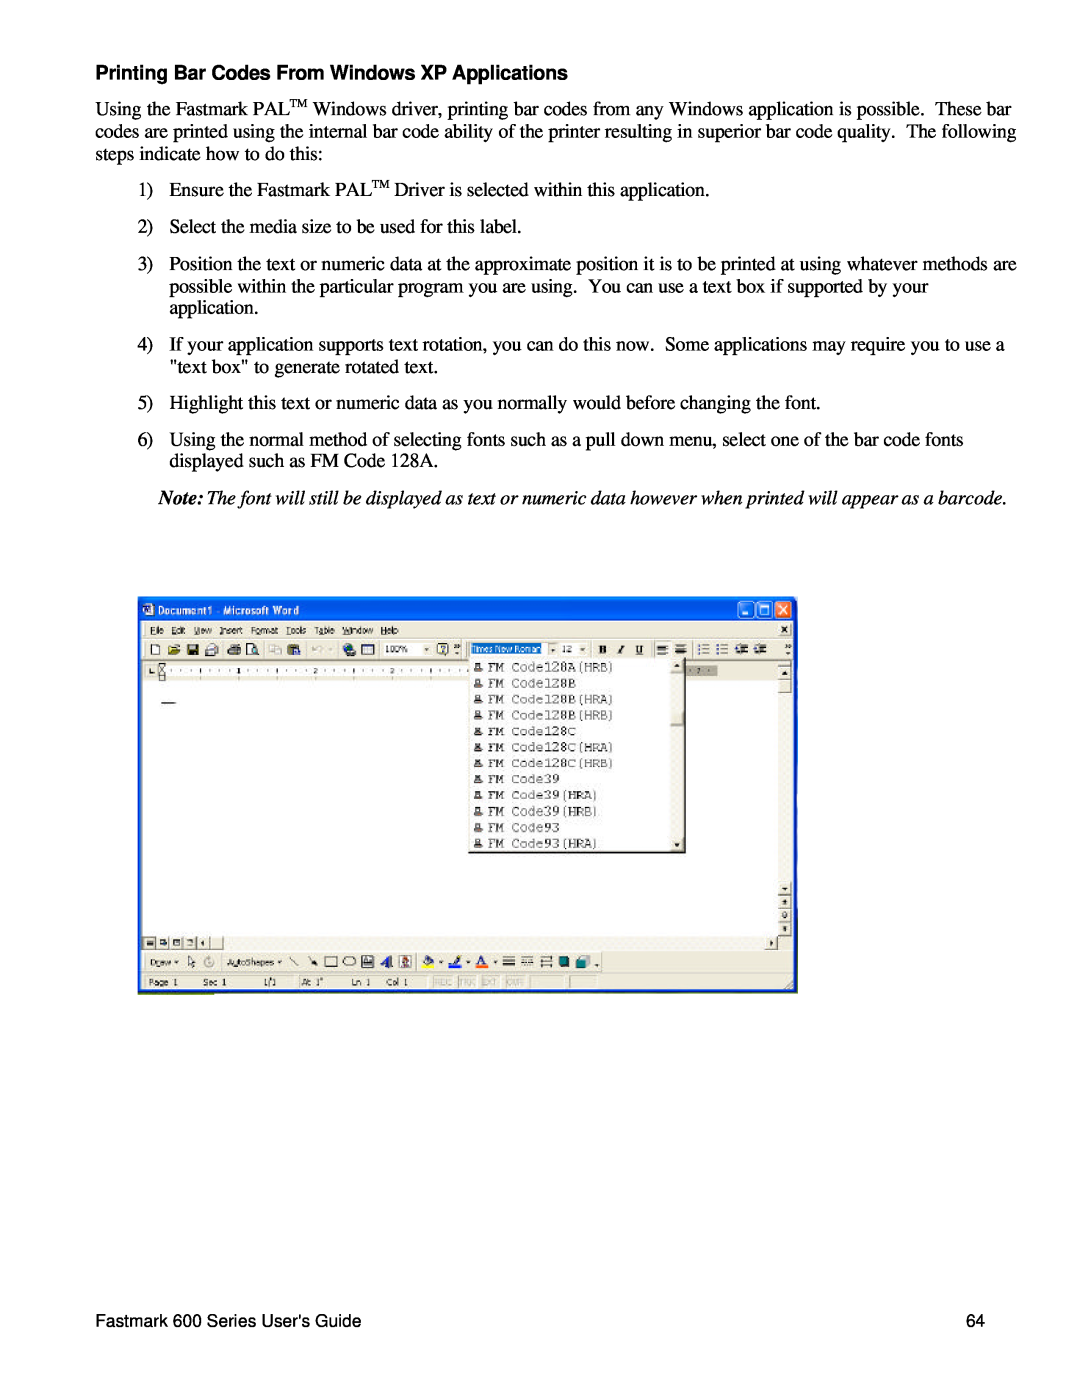 AMT Datasouth 600 manual Printing Bar Codes From Windows XP Applications 